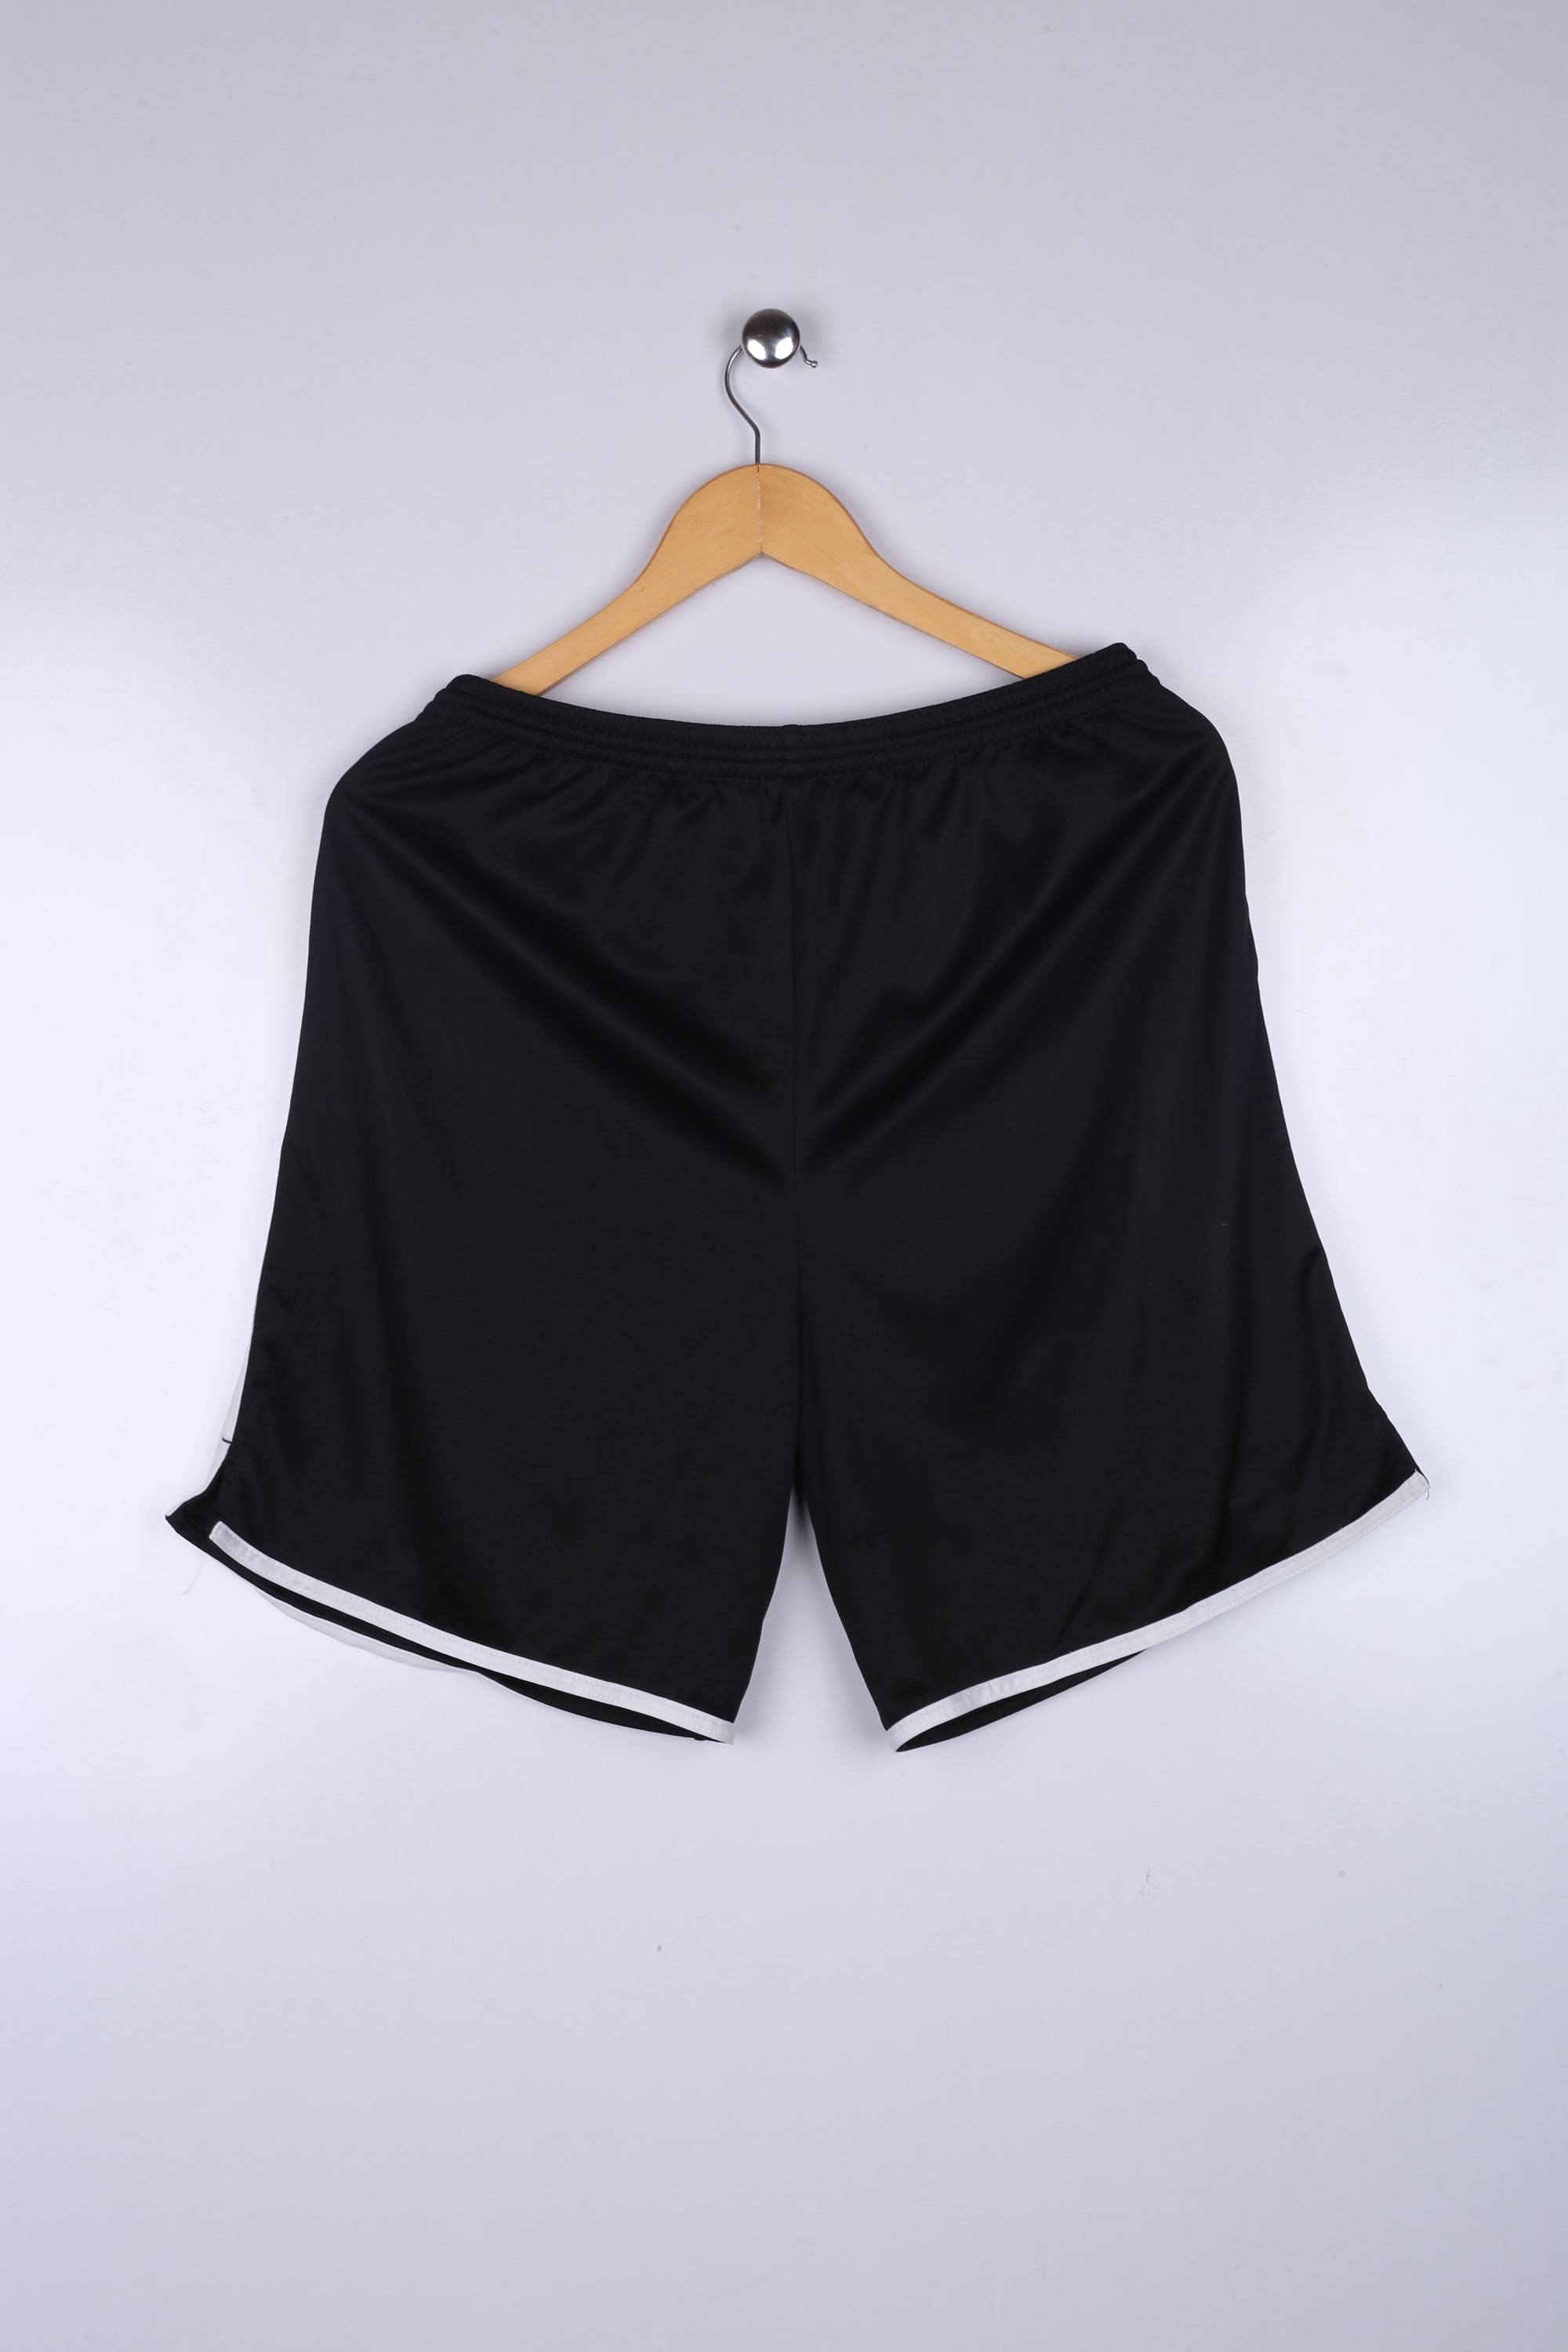 Vintage Errea Shorts Black Large